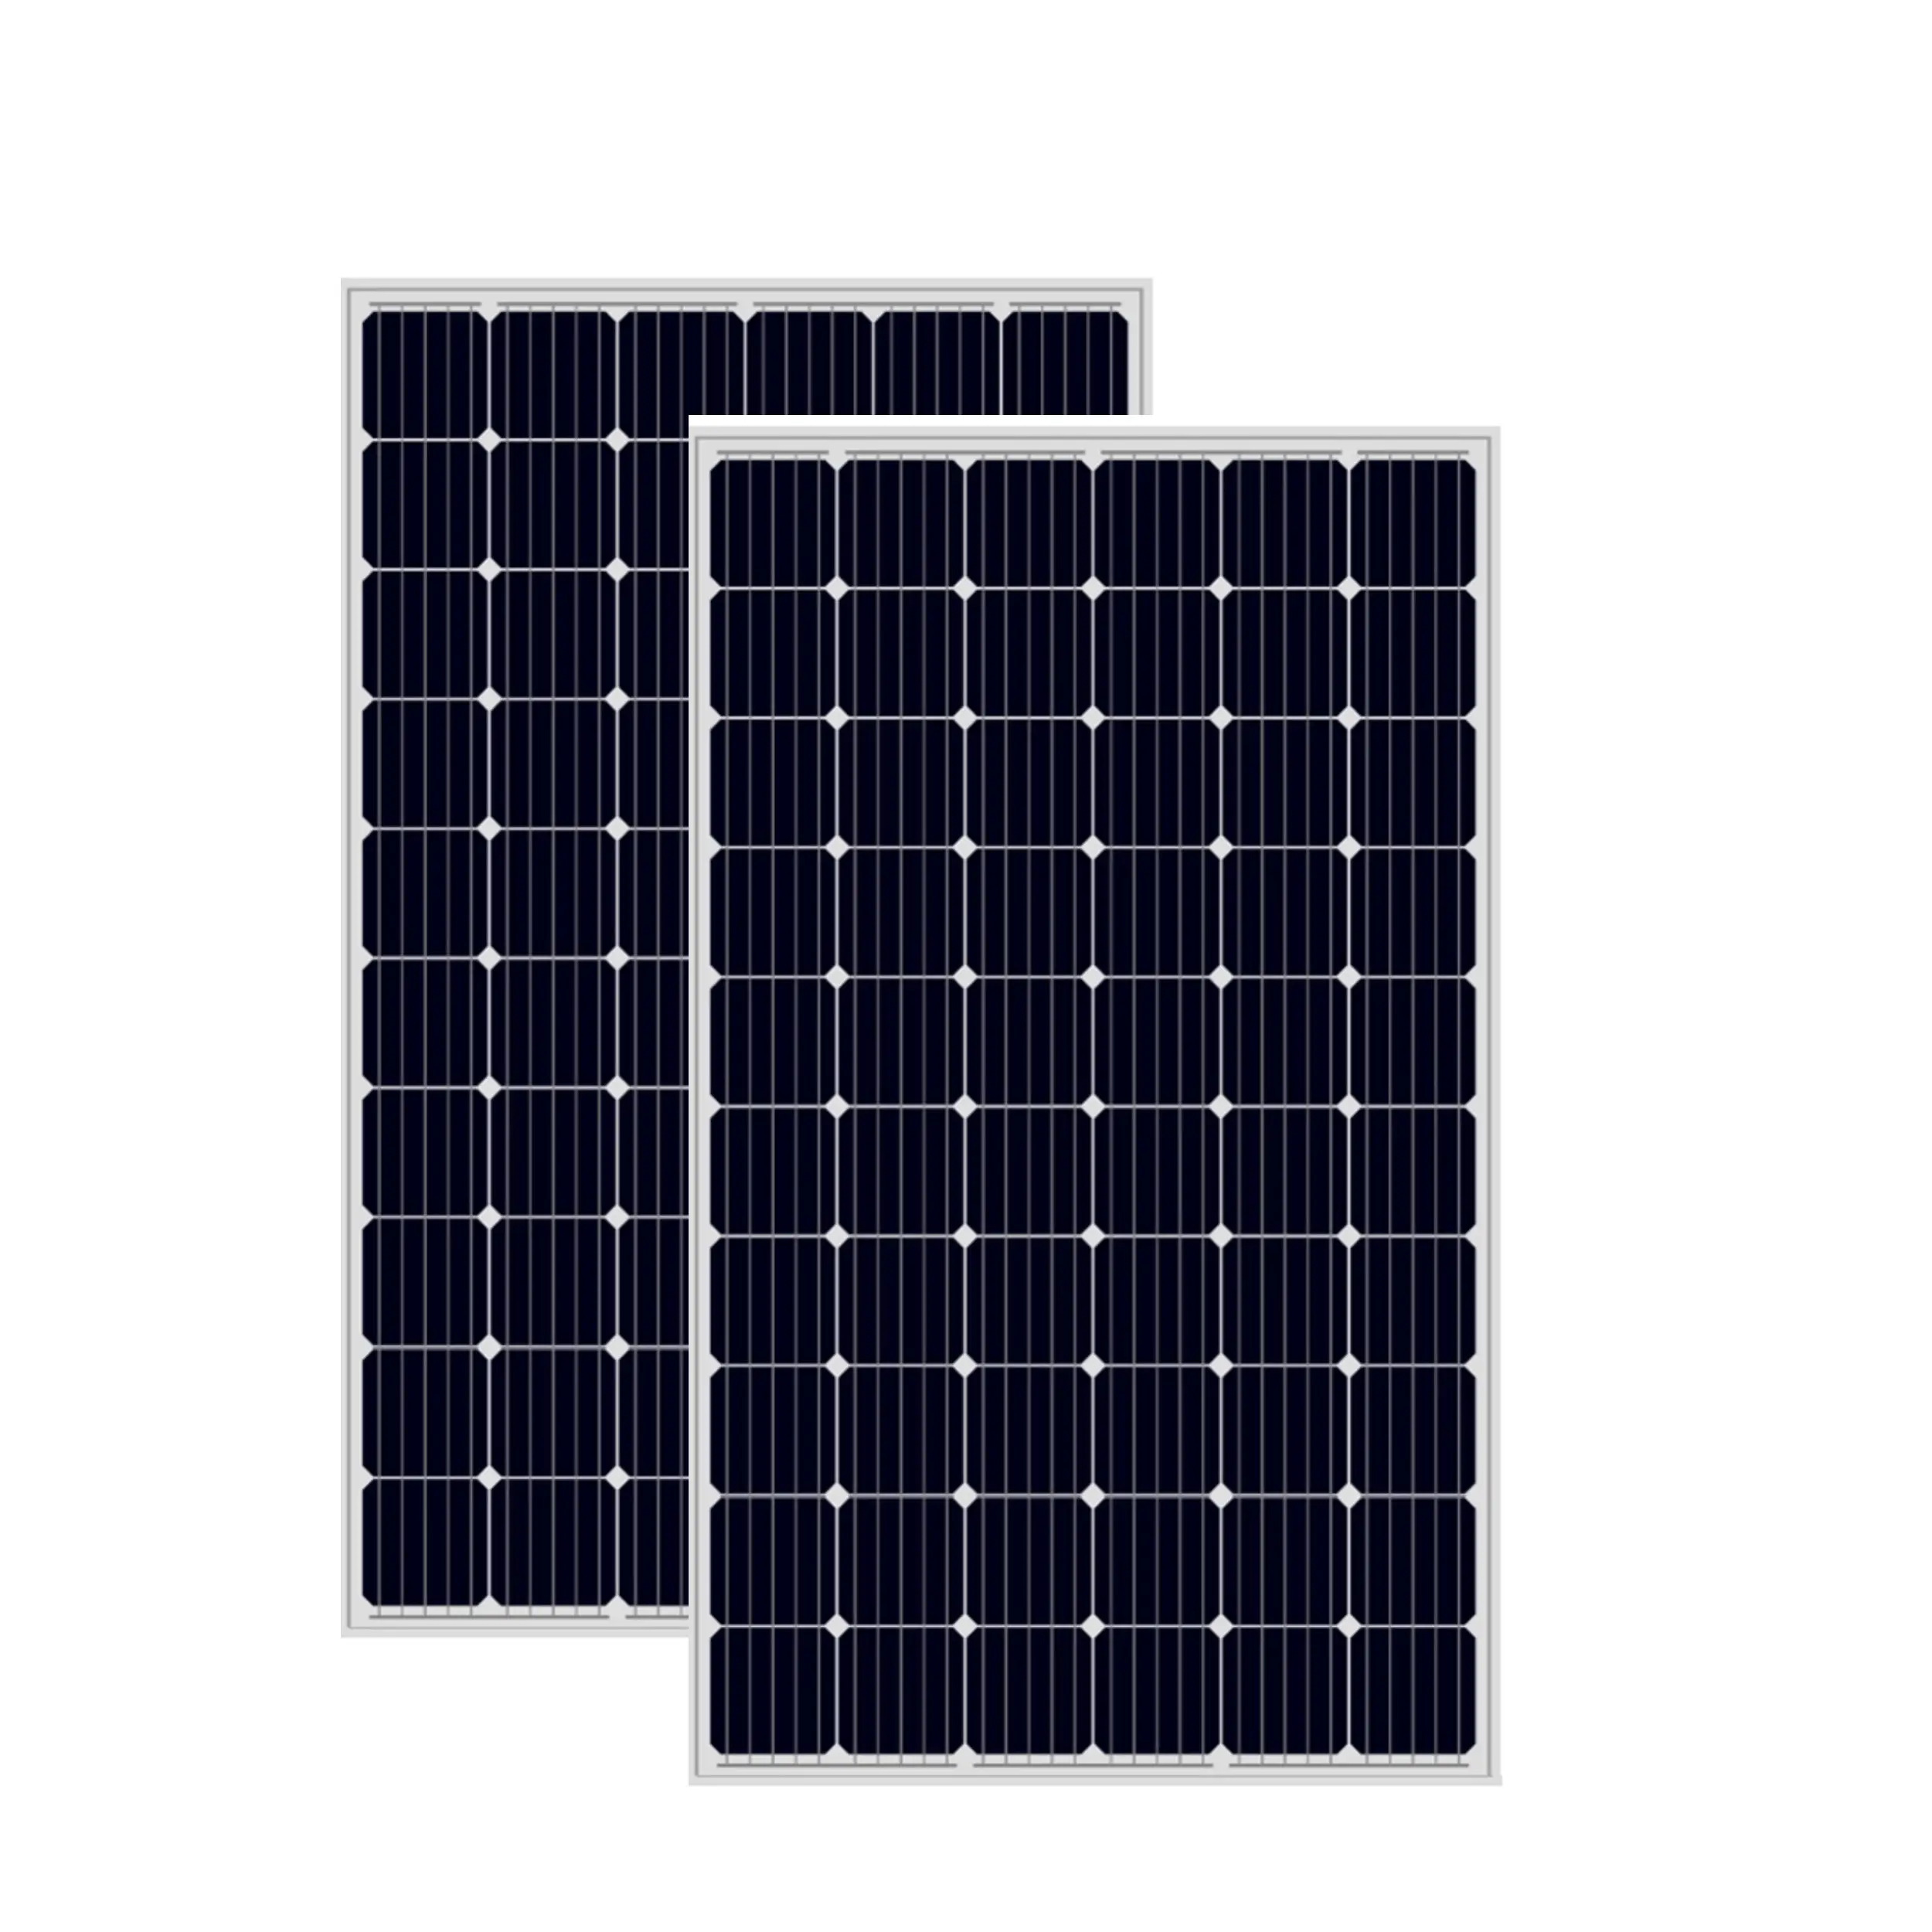 Shinefarホットセール大型太陽光発電パネルフルブラック330w